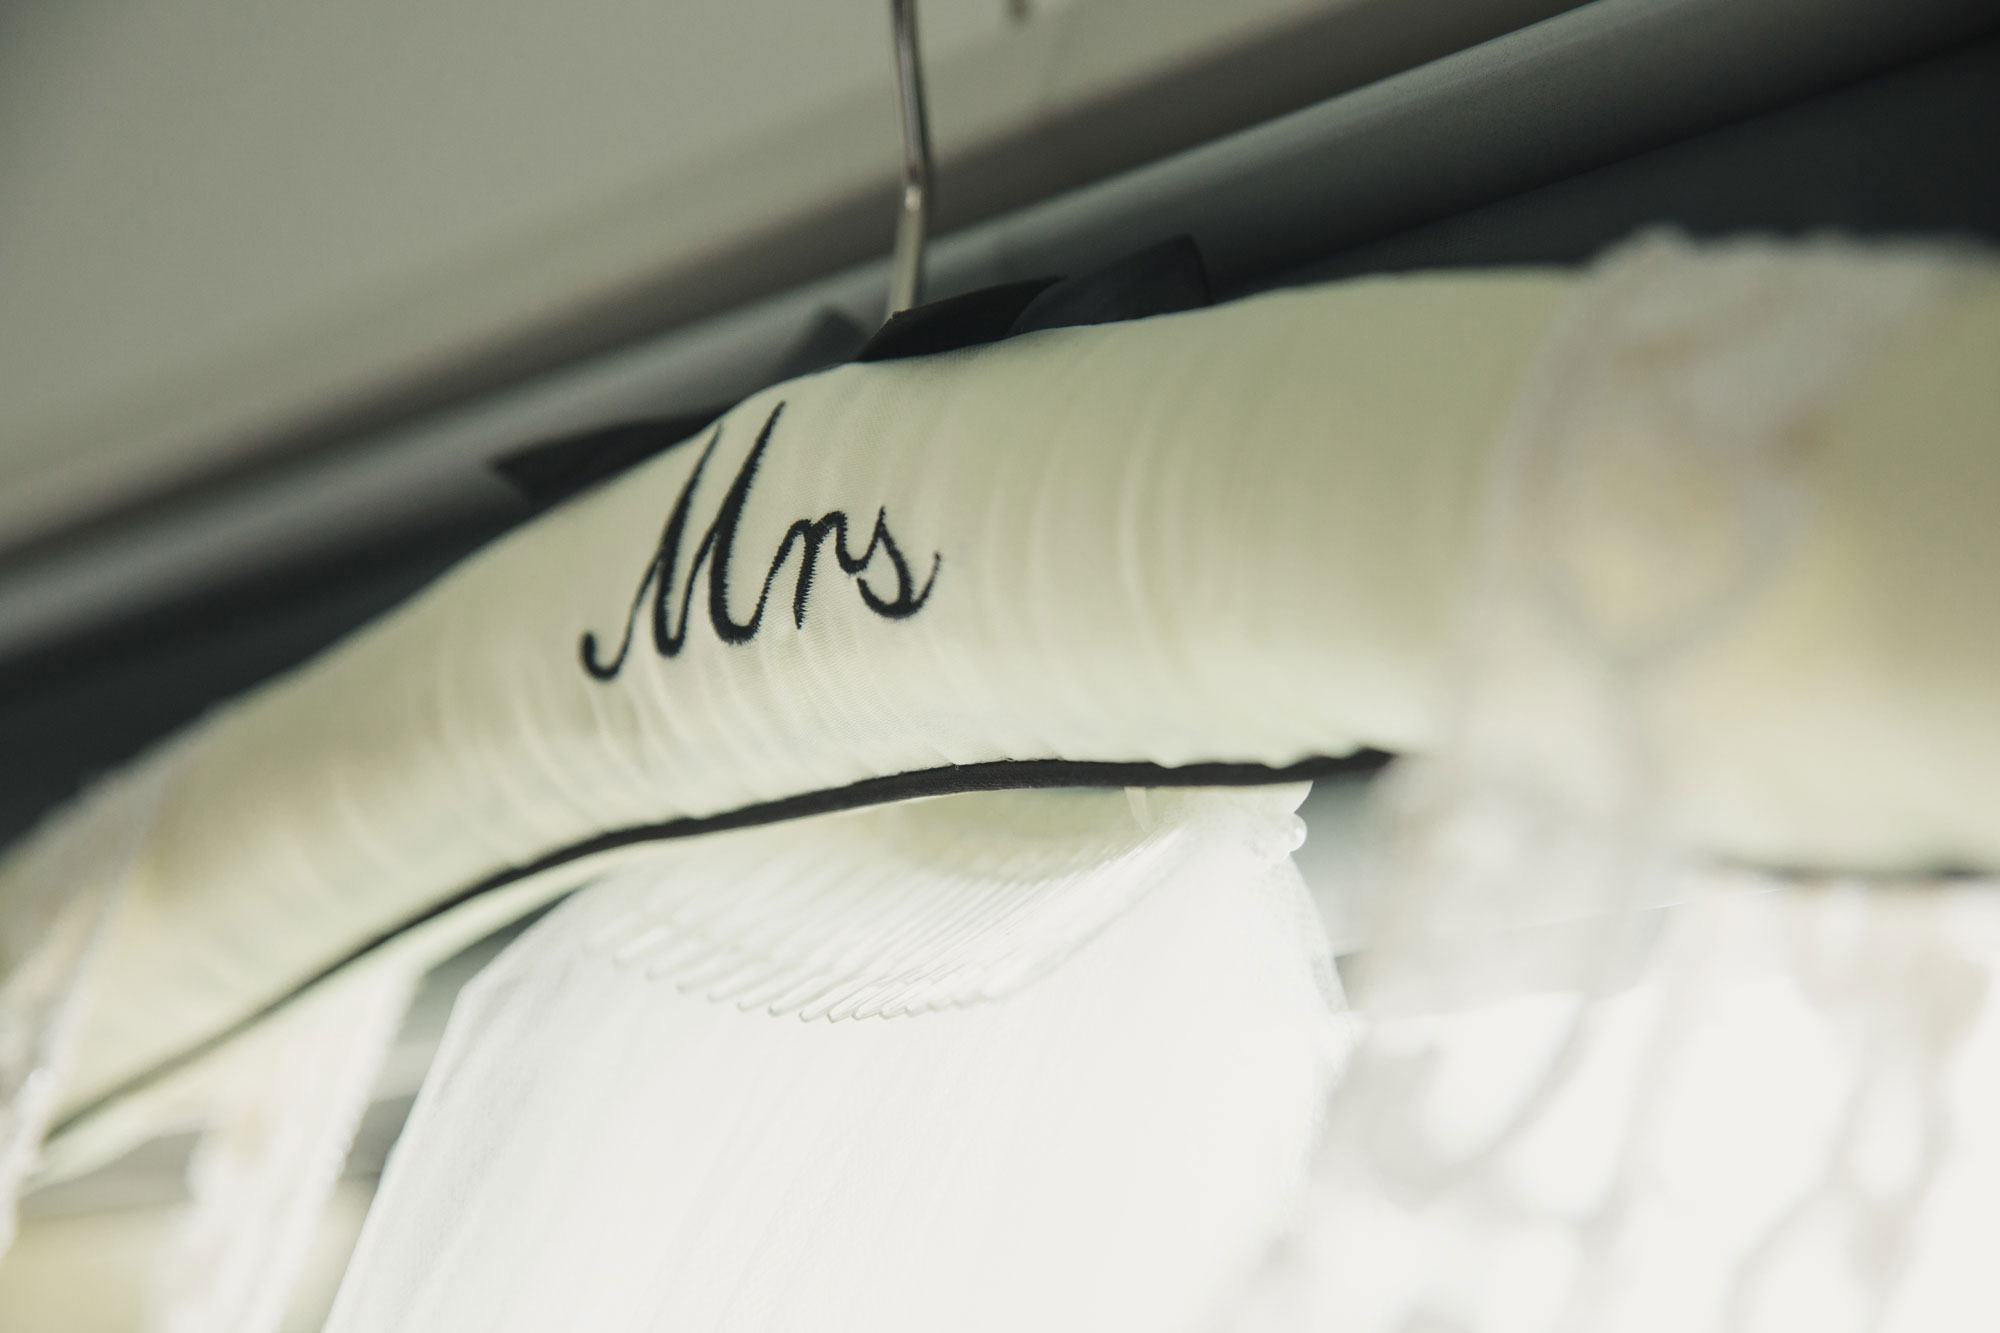 bride dress hanger